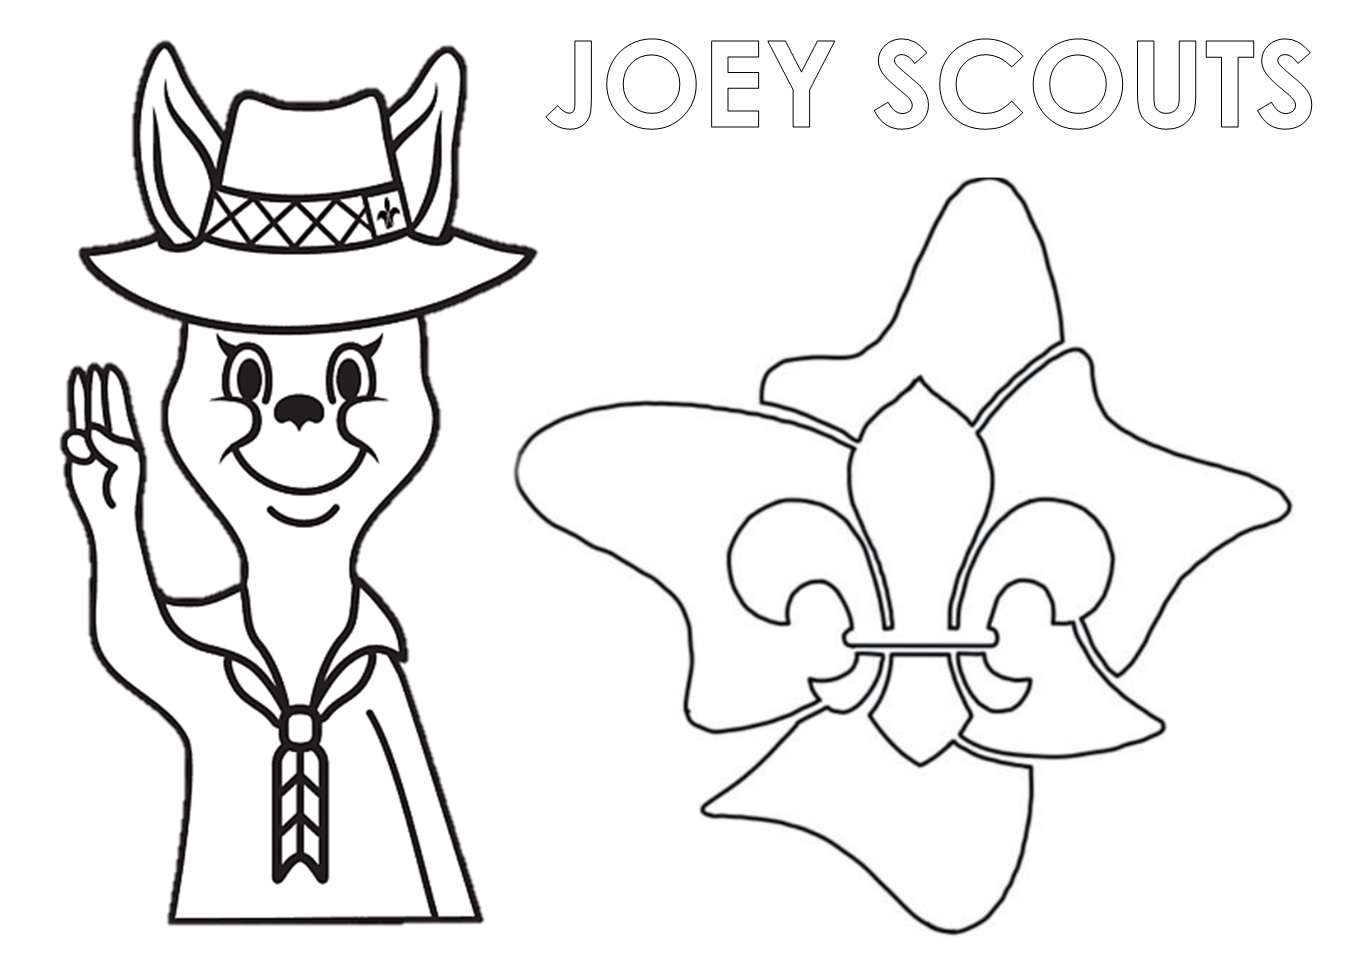 Joey Scout Puzzel puzzel online van foto